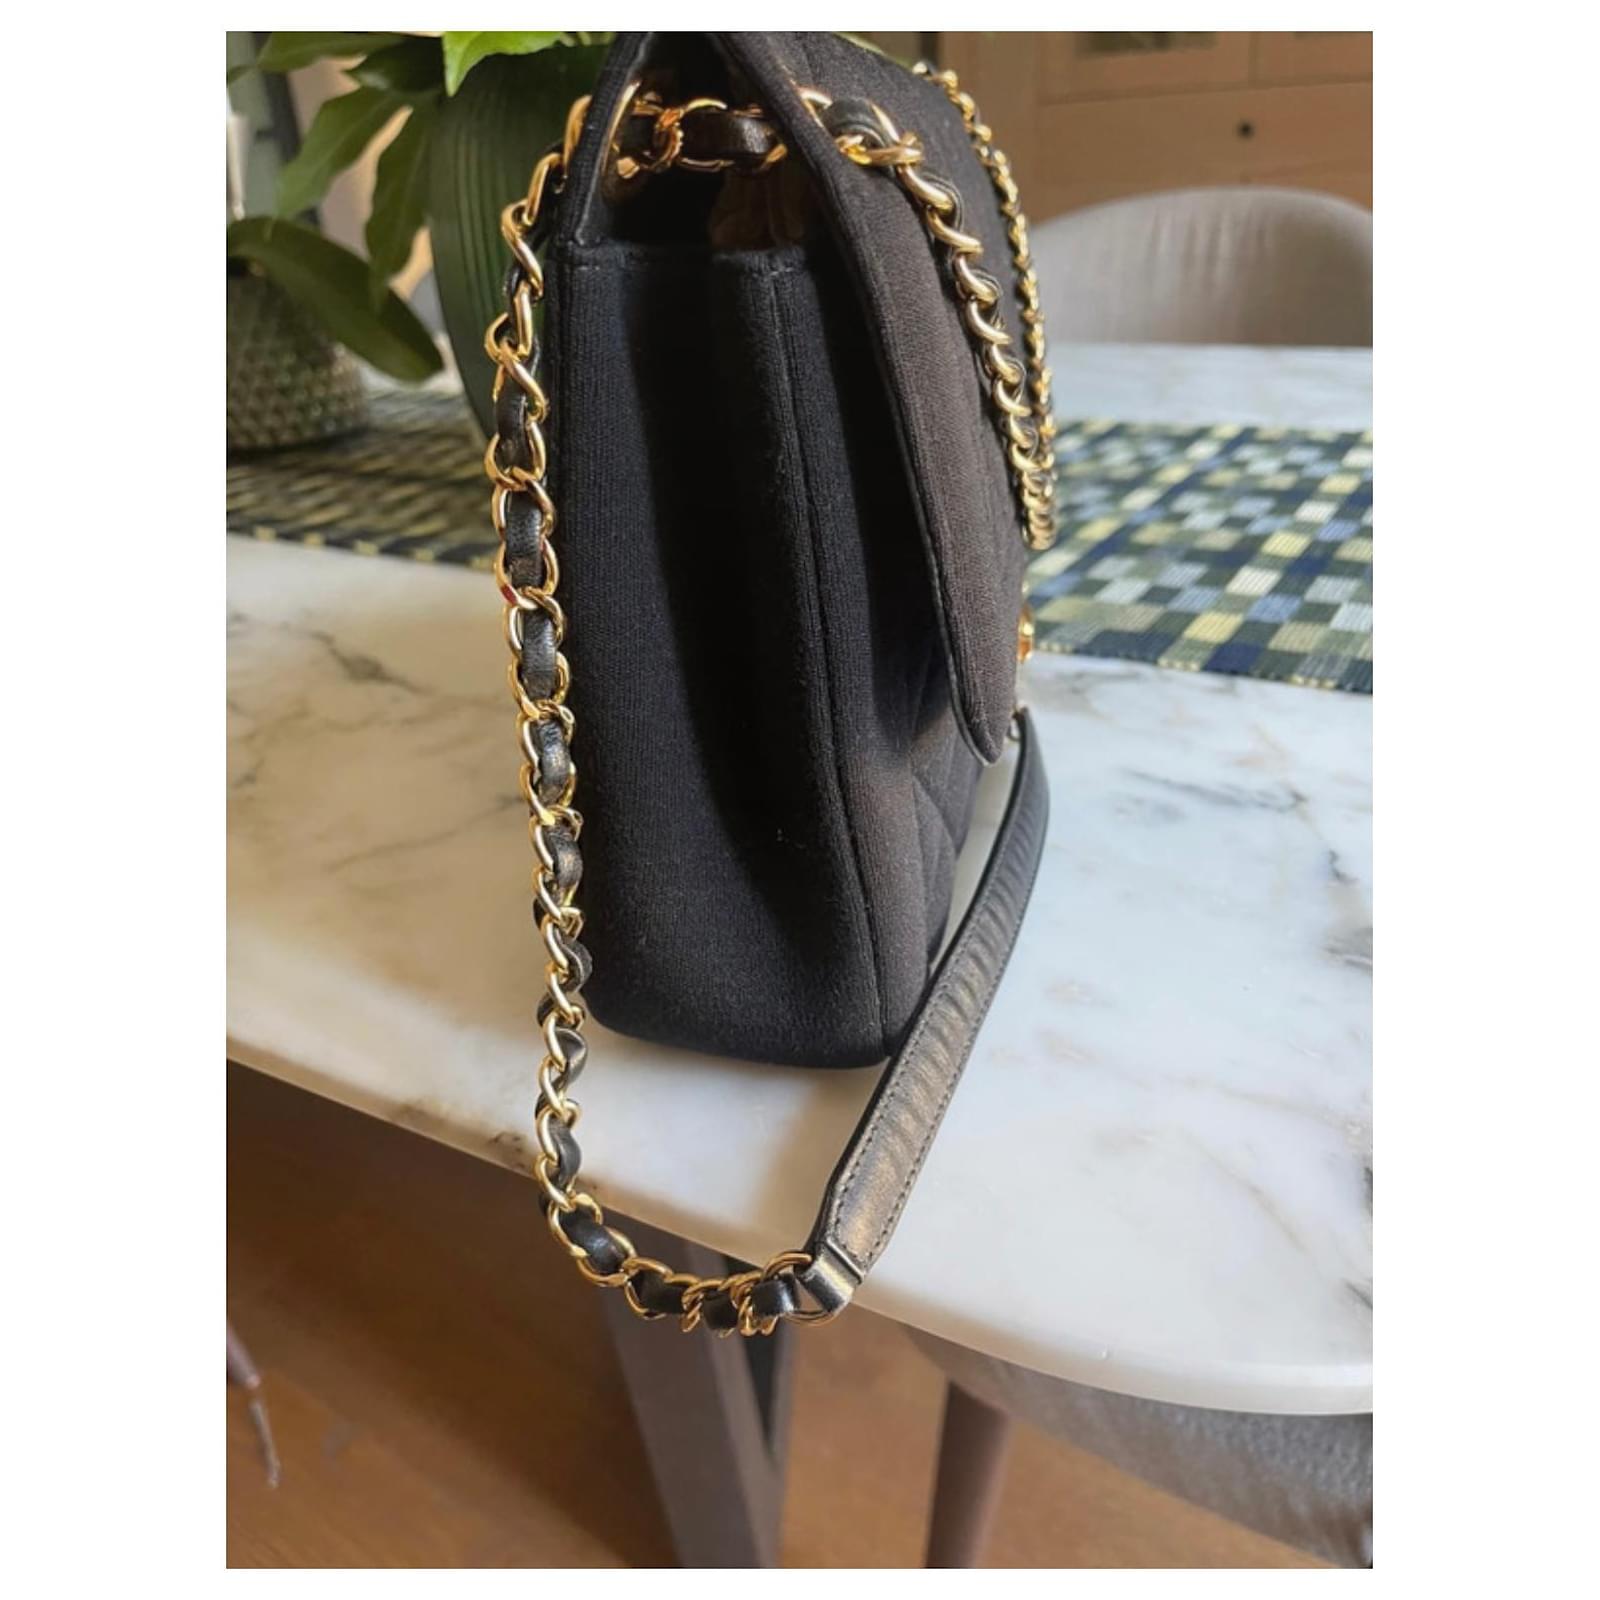 Fashion Ladies Handbag For Women Purse Crossbody Bag Satchel - BLACK |  Jumia Nigeria